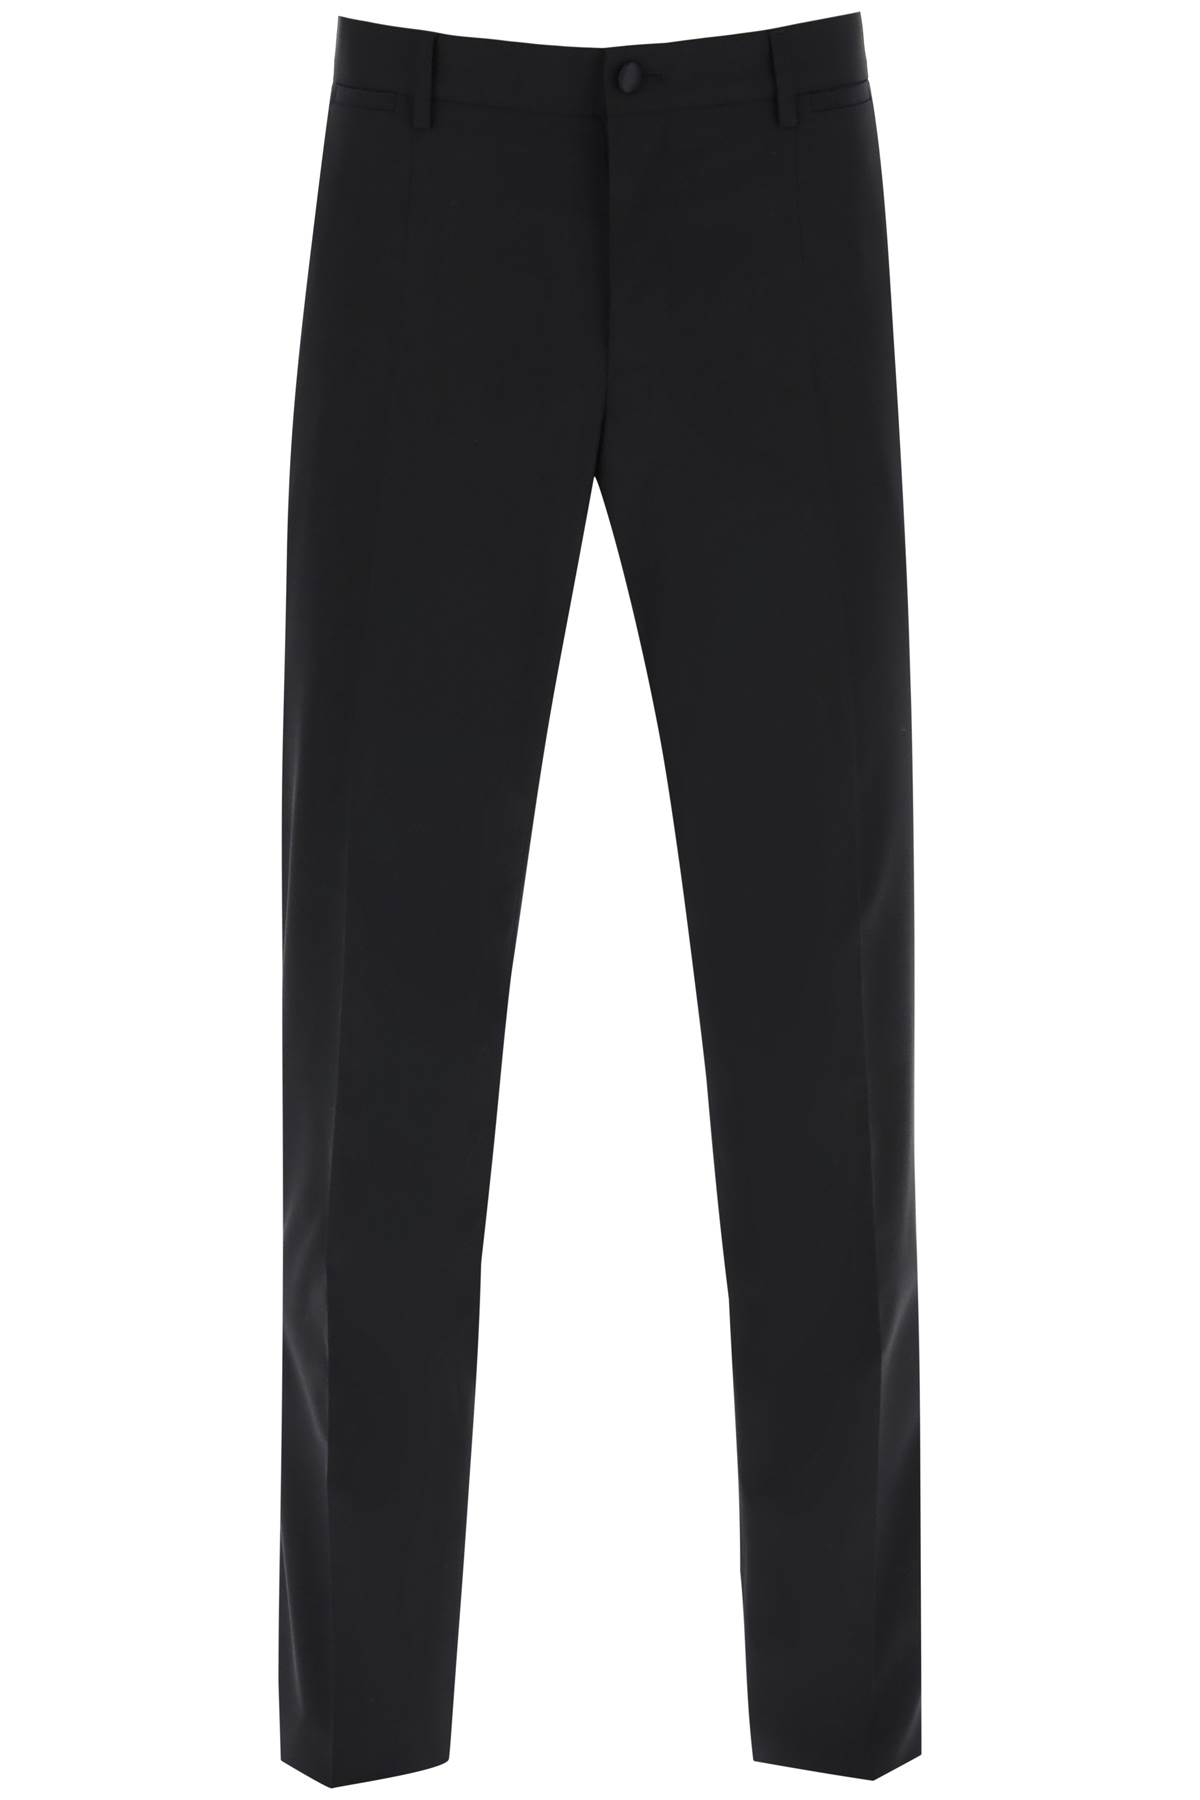 Dolce & Gabbana Stretch Wool Tuxedo Trousers In Black